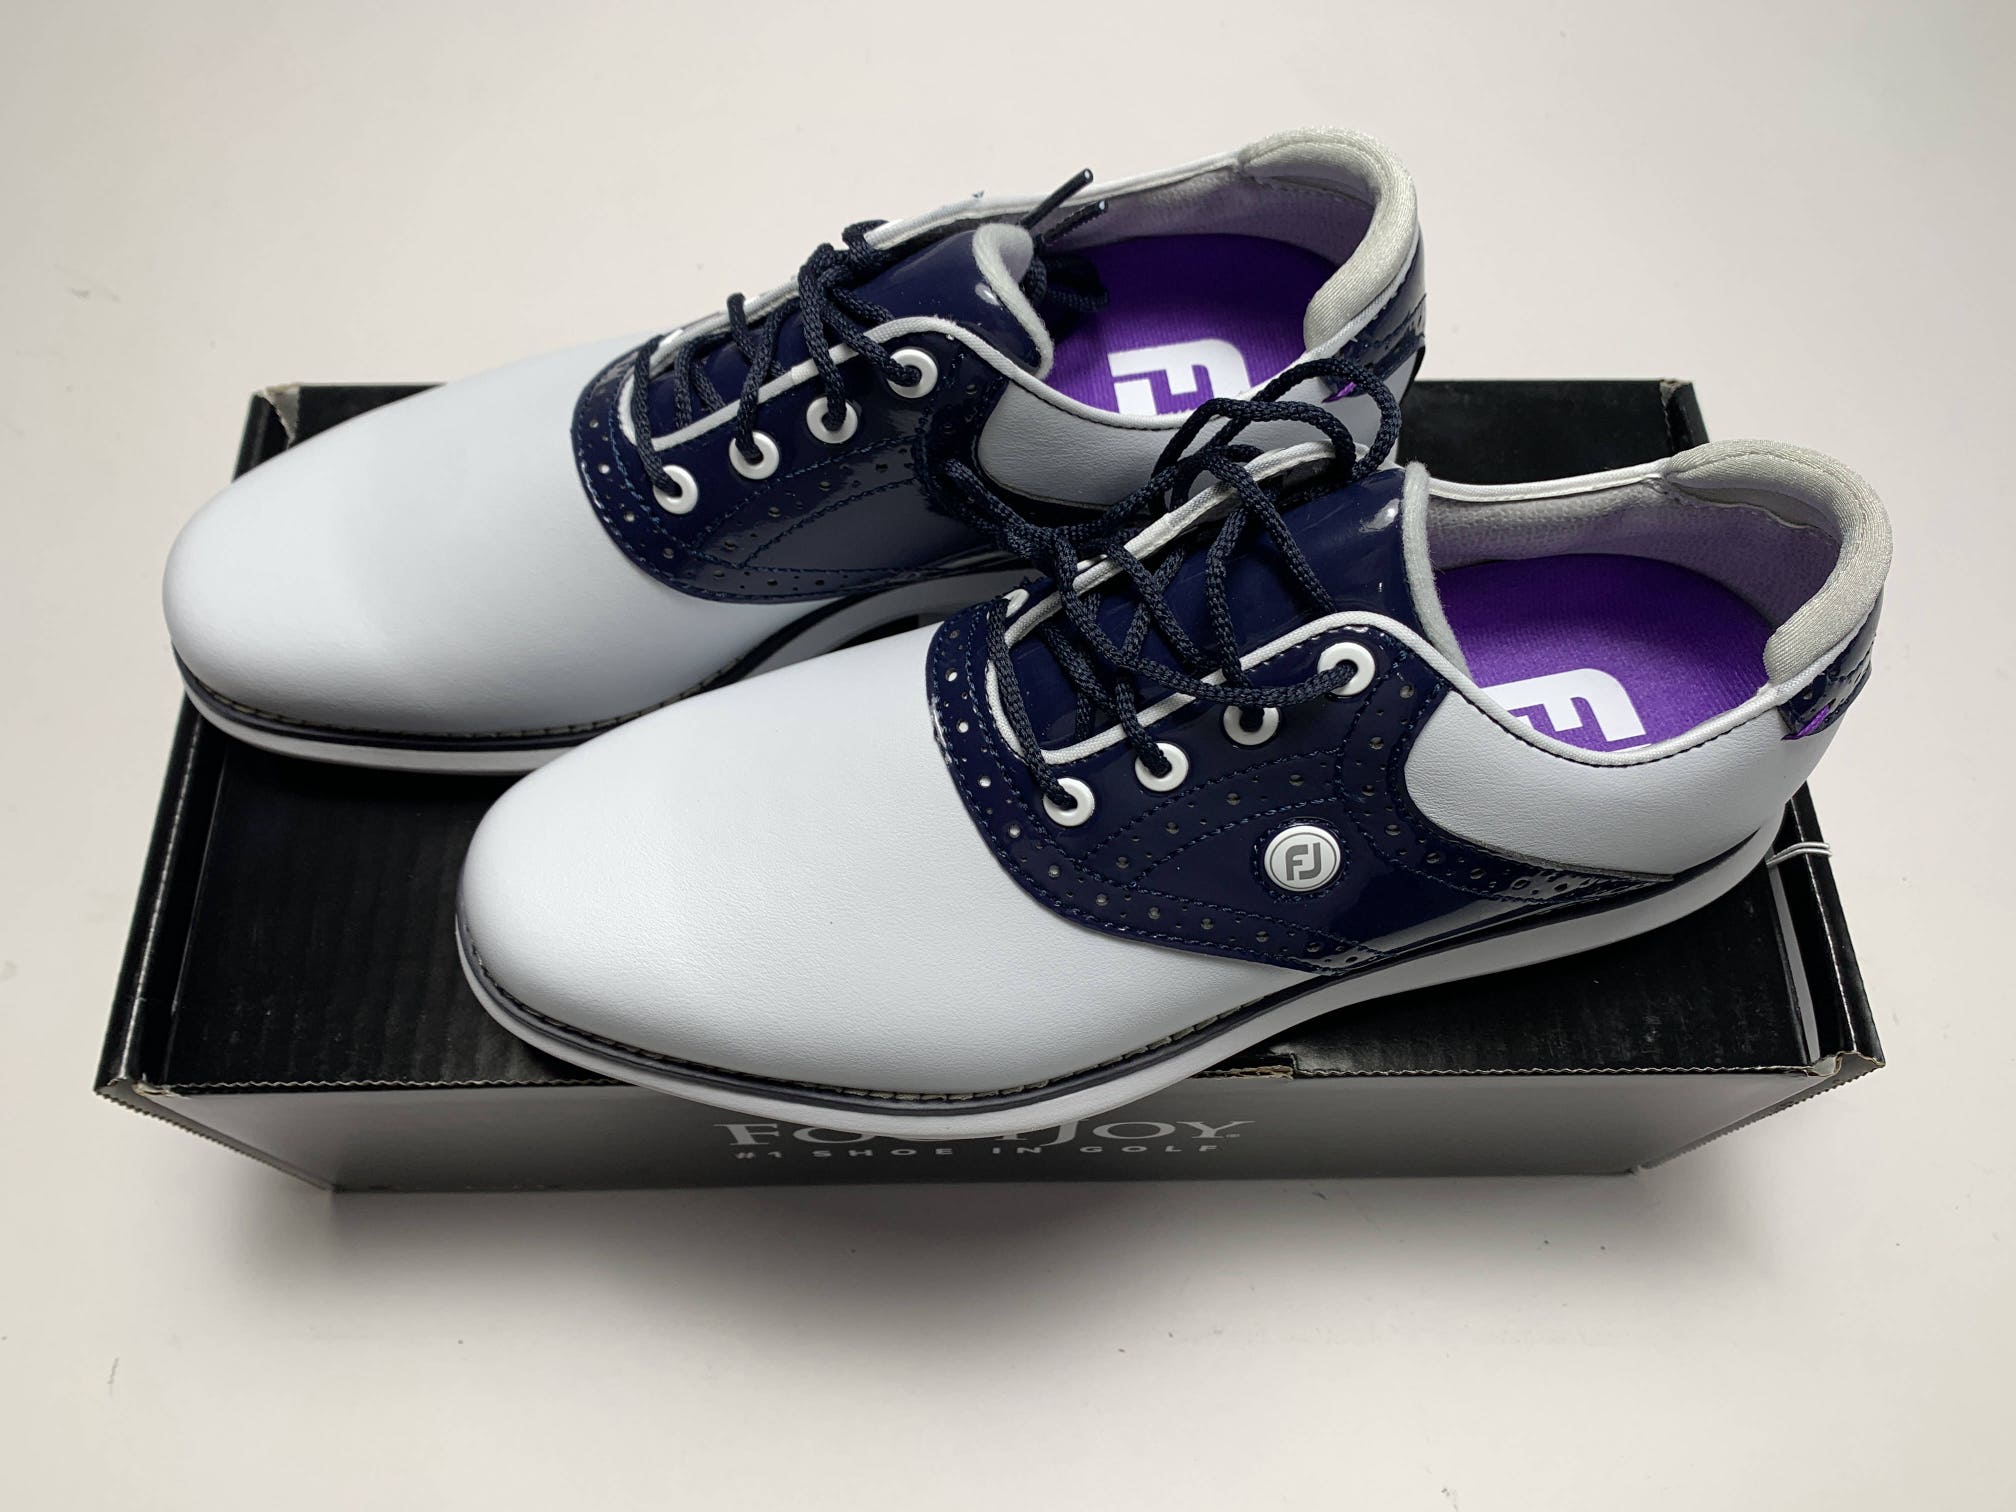 FootJoy FJ Traditions Golf Shoes White Navy Patent Women's SZ 7.5 (97899)